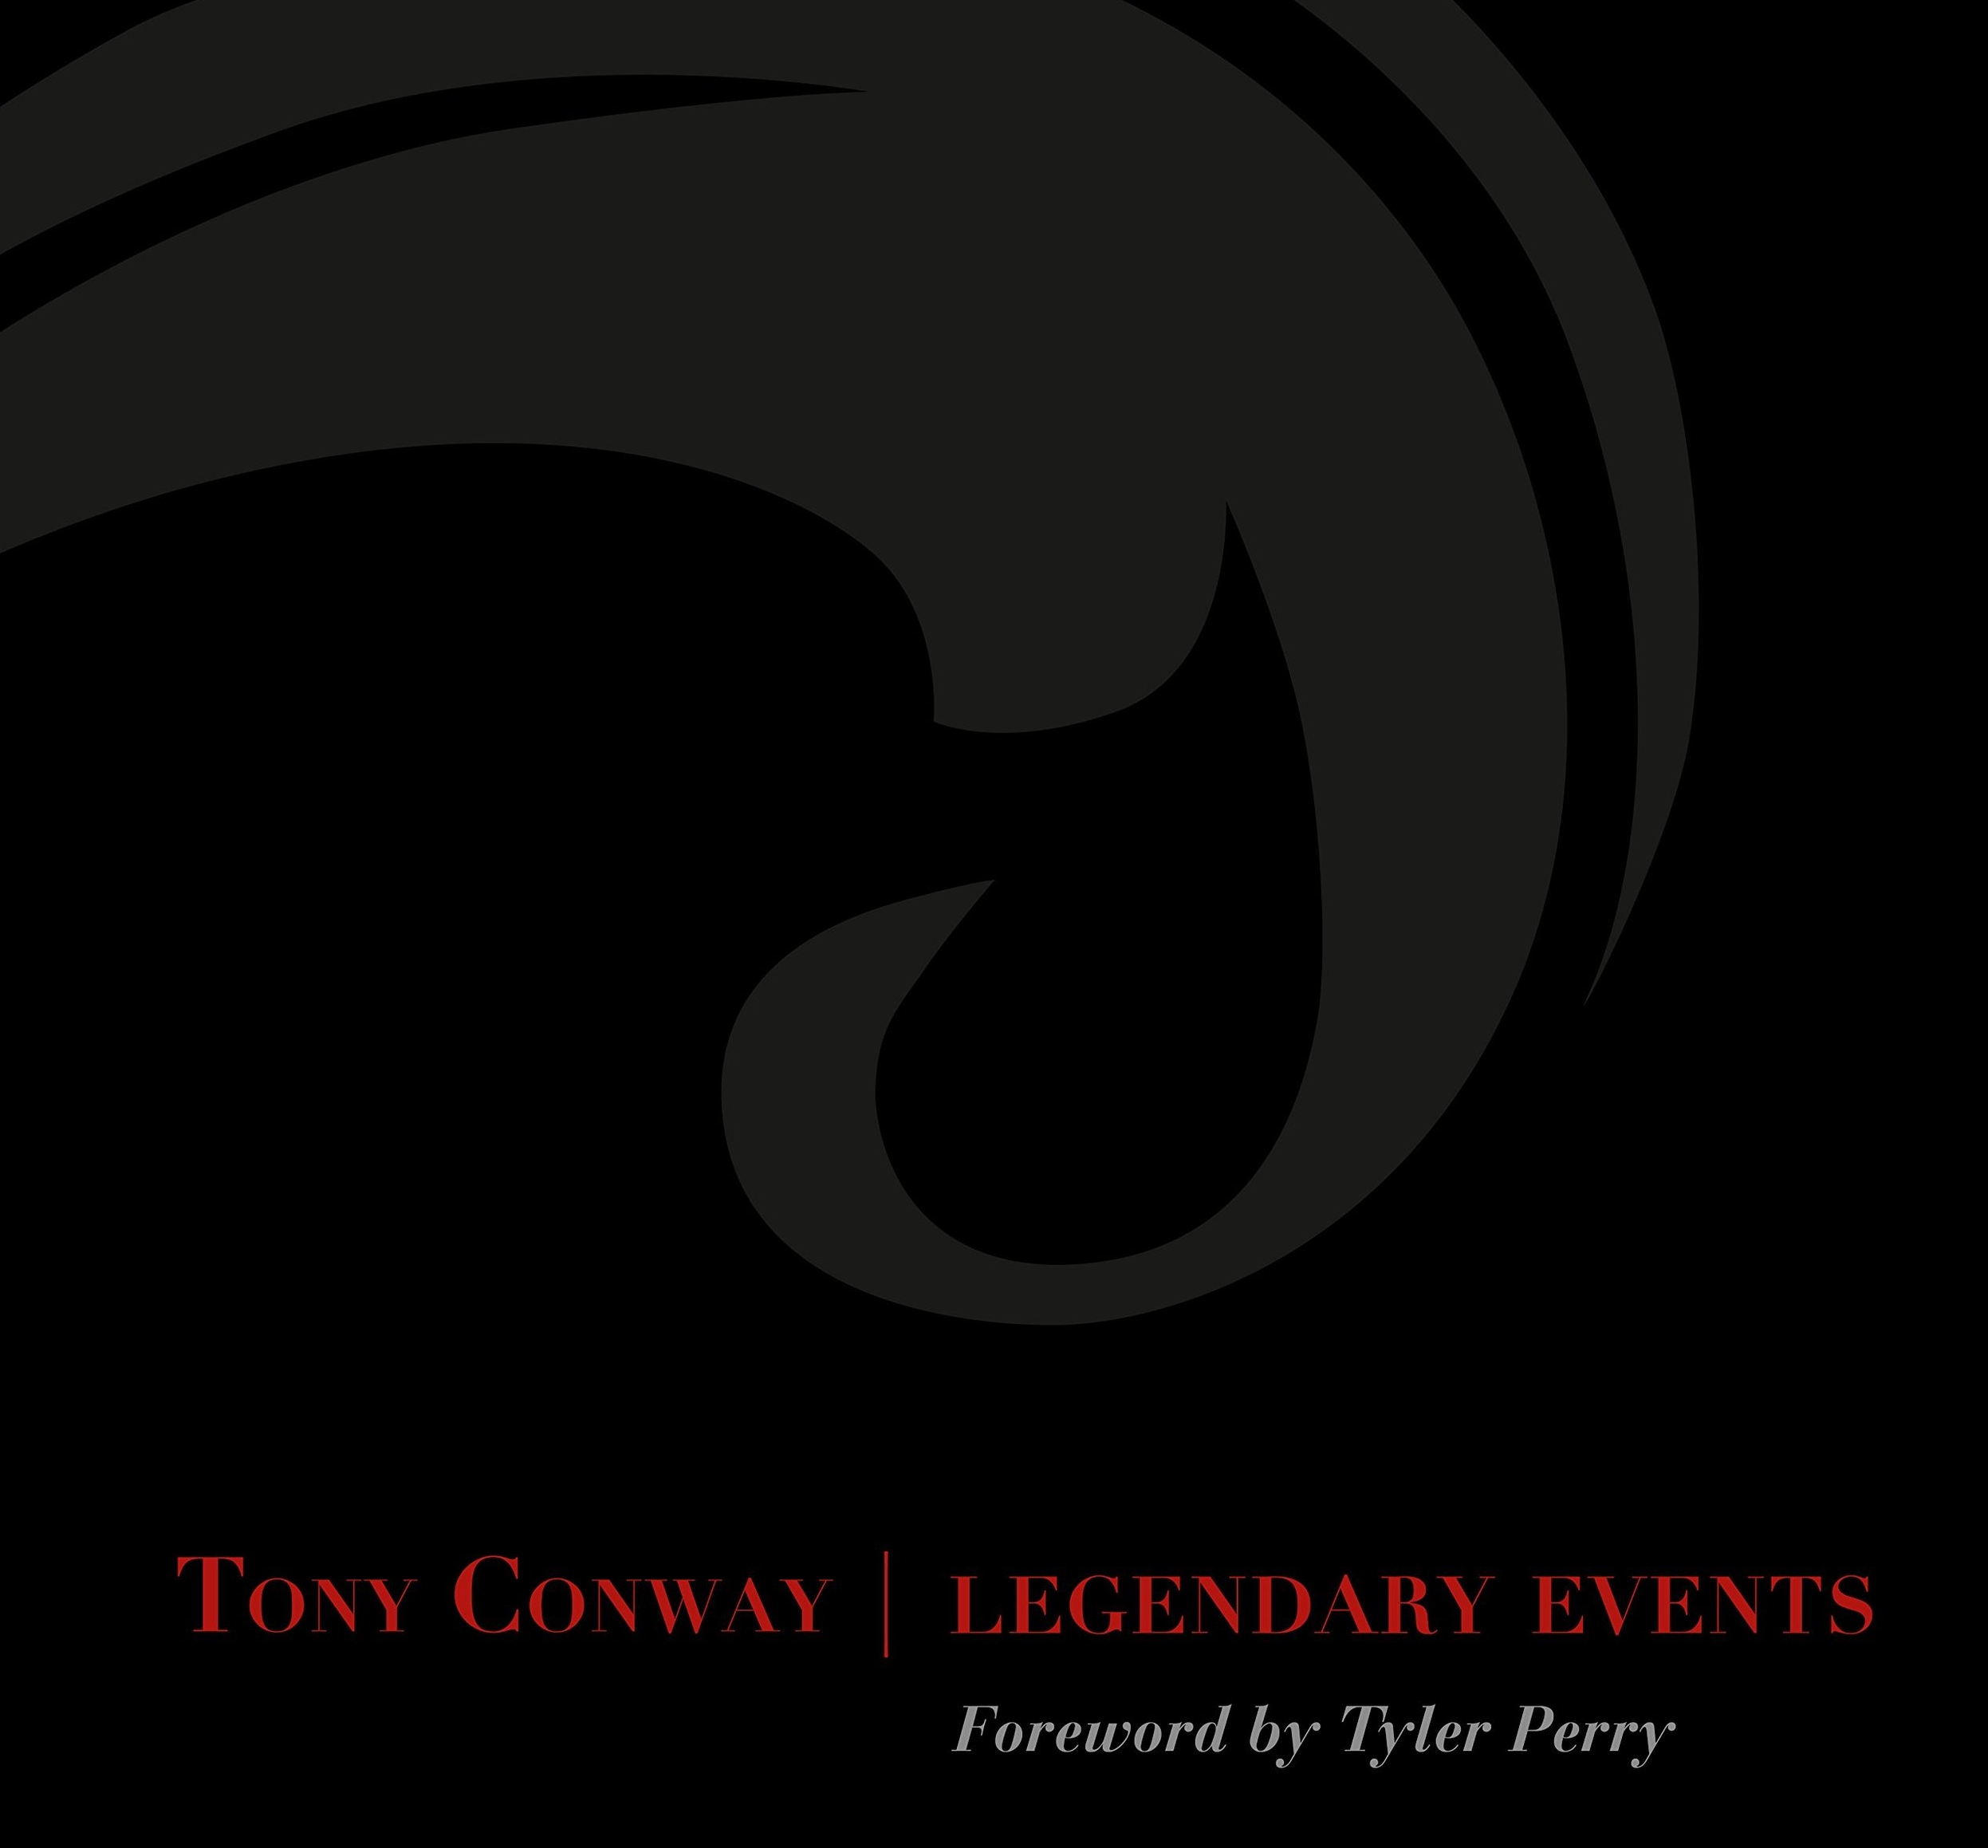 Tony Conway|Legendary Events